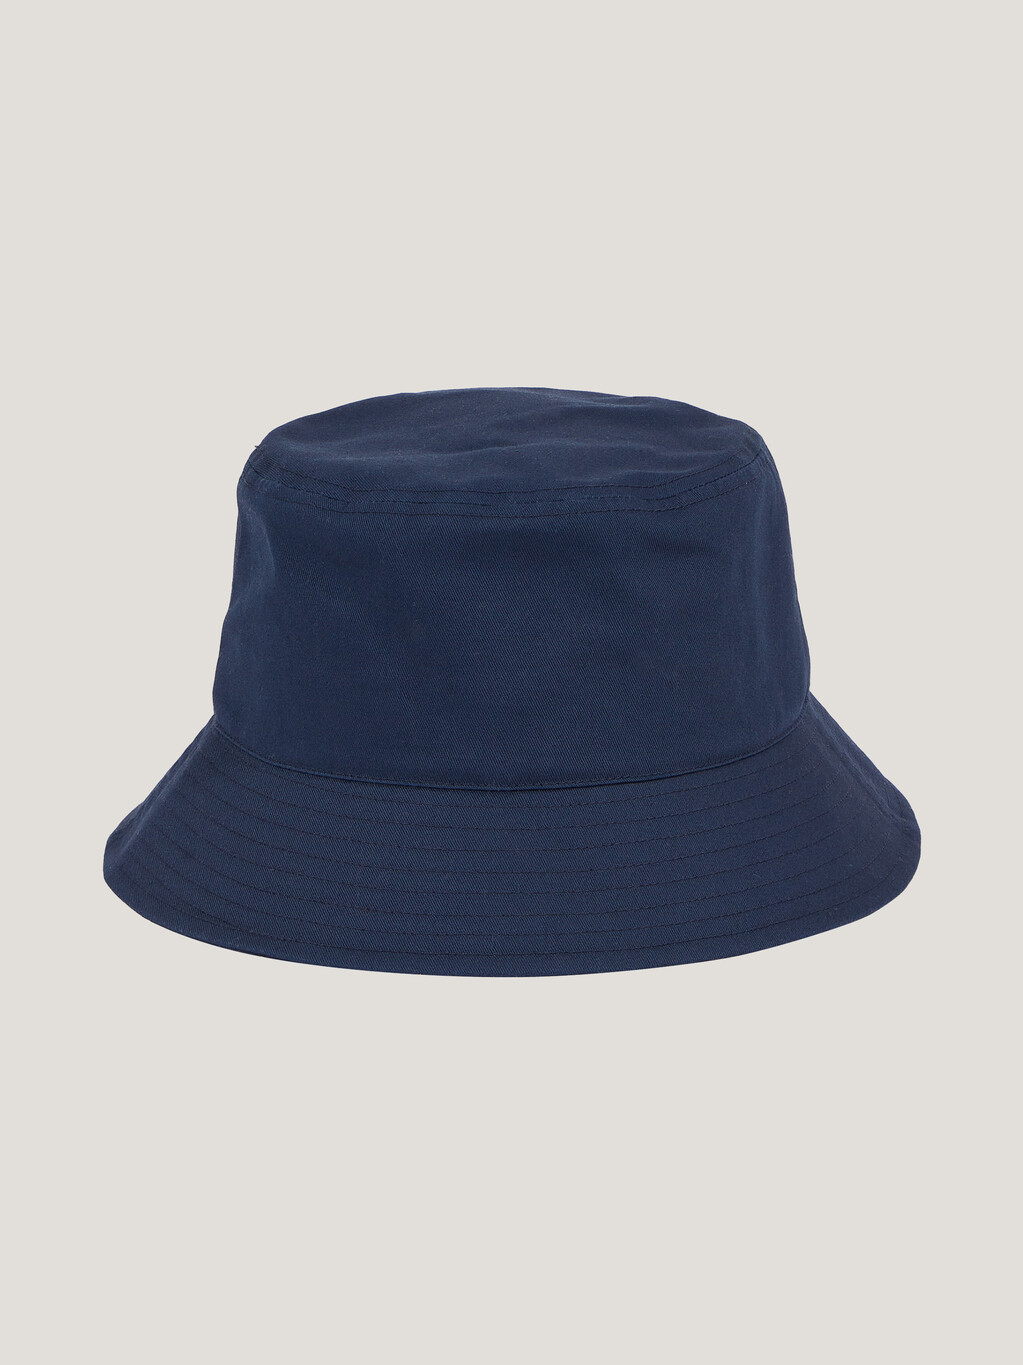 Tommy Jeans Heritage Bucket Hat, Twilight Navy, hi-res